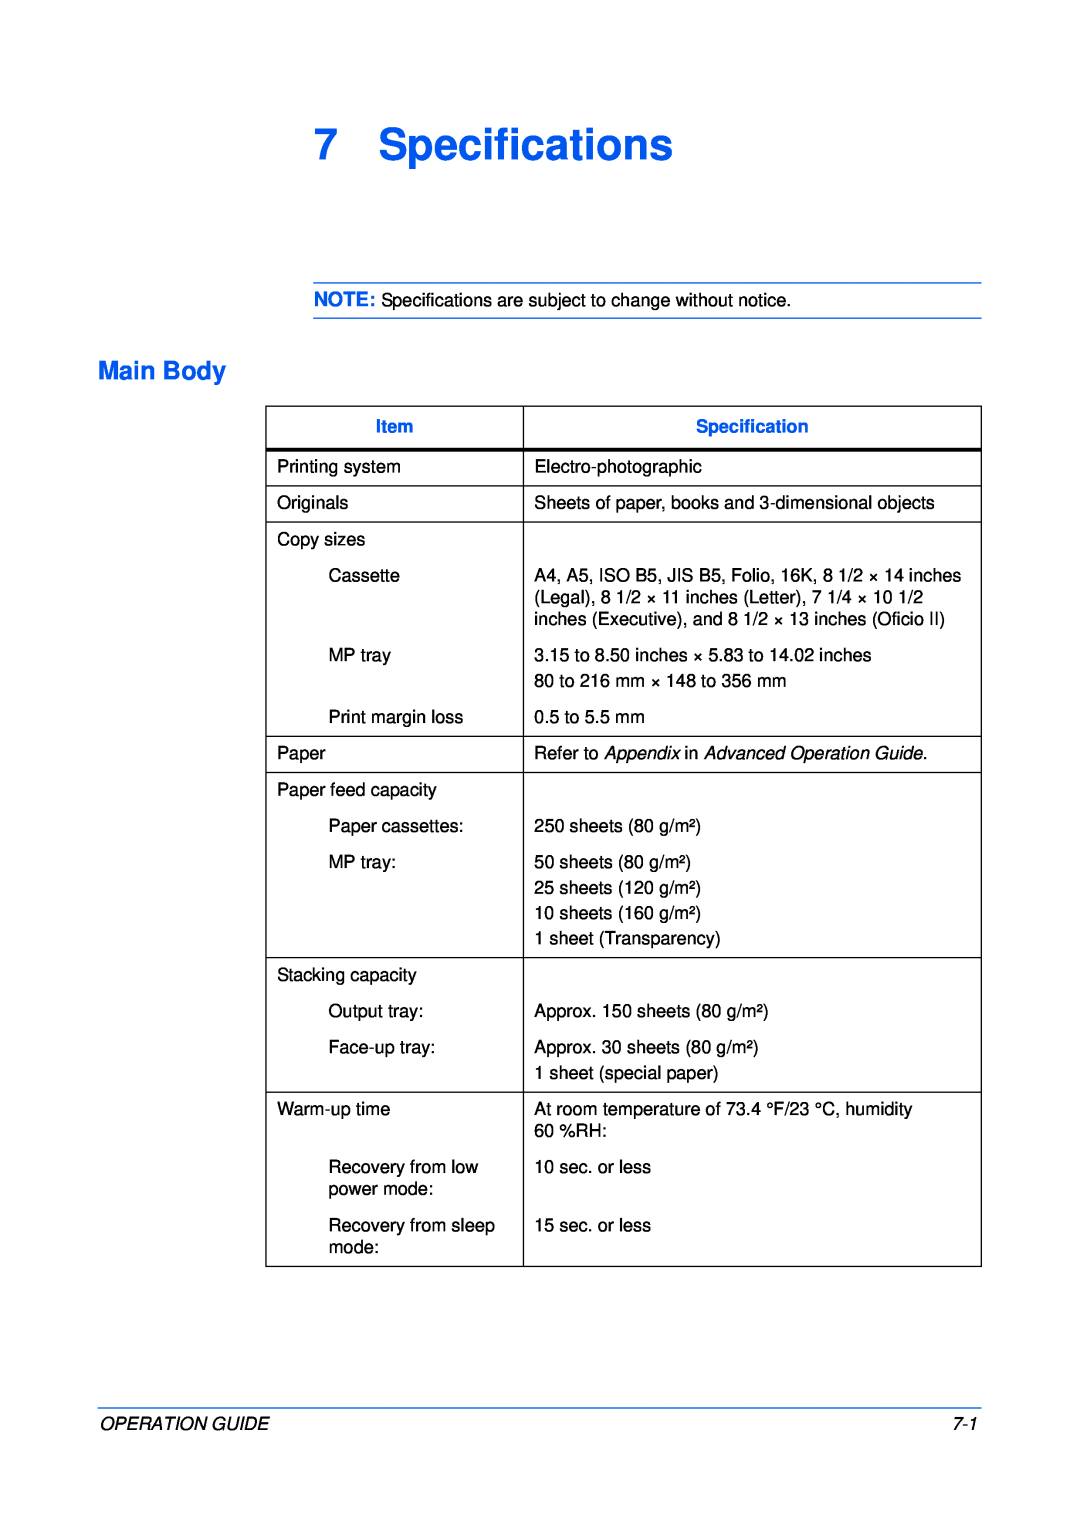 Olivetti 18MF manual Specifications, Main Body 